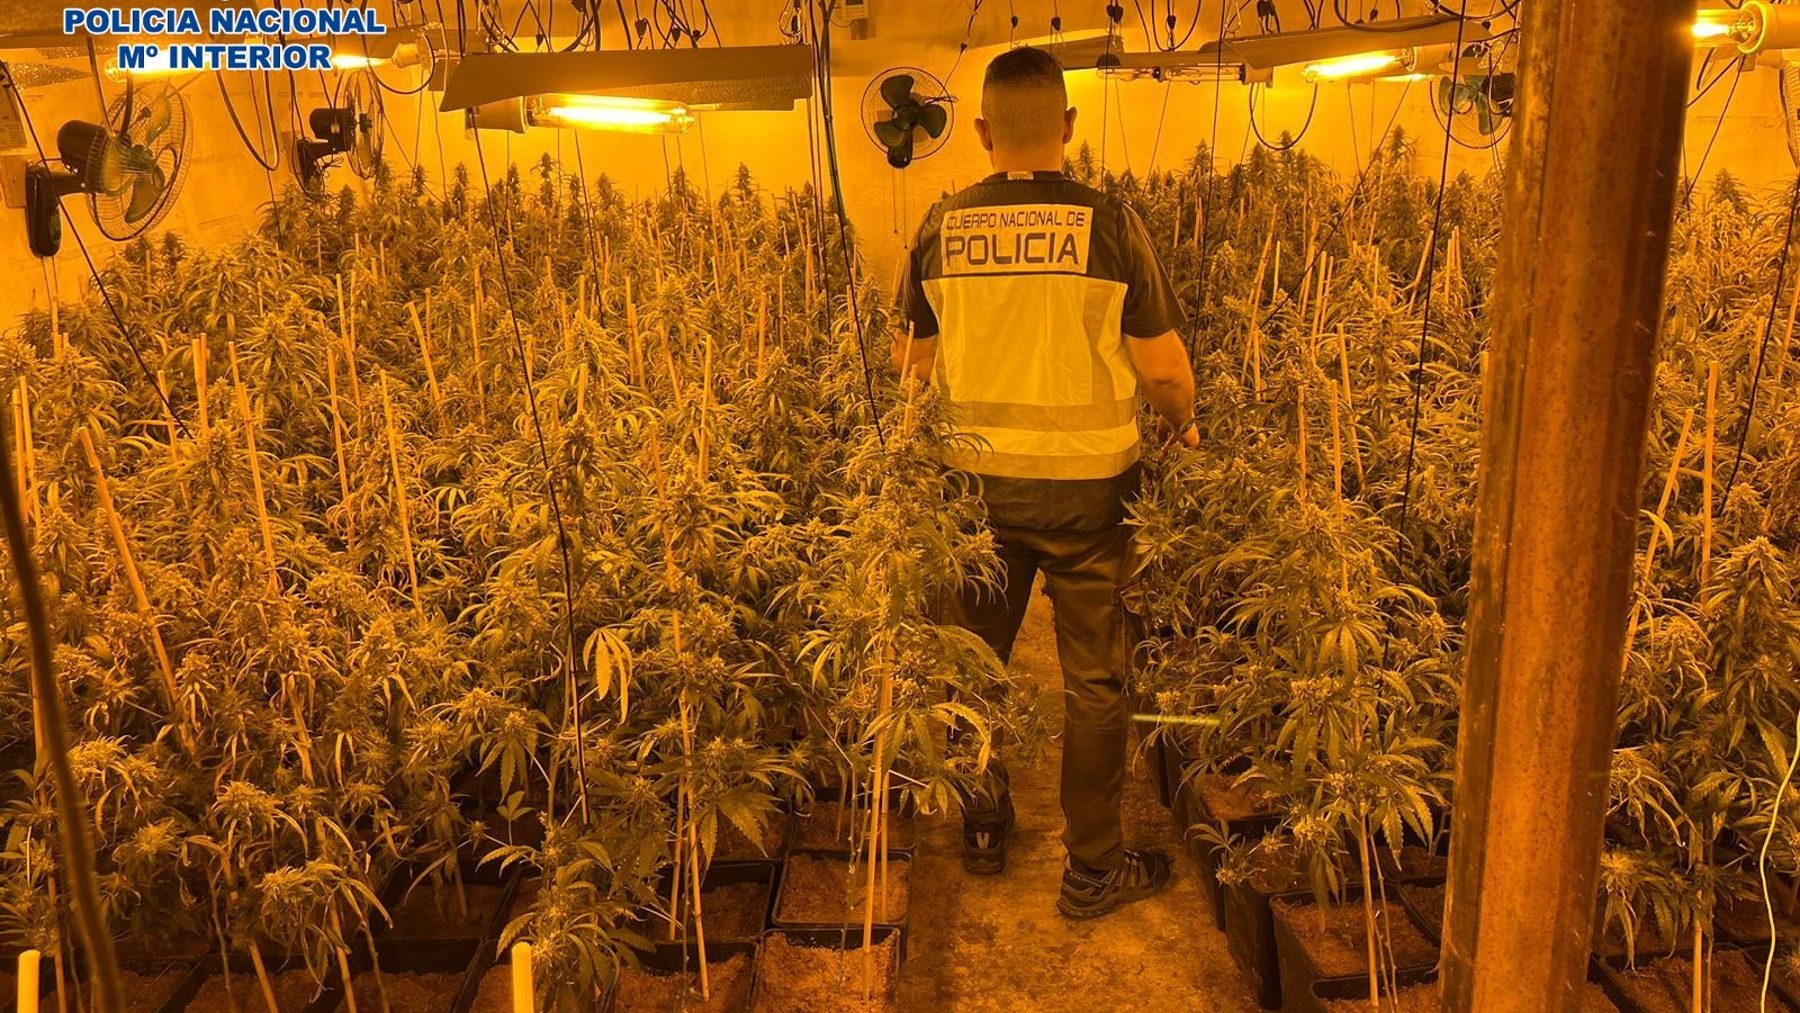 Plantación interior de marihuana (POLICÍA NACIONAL).